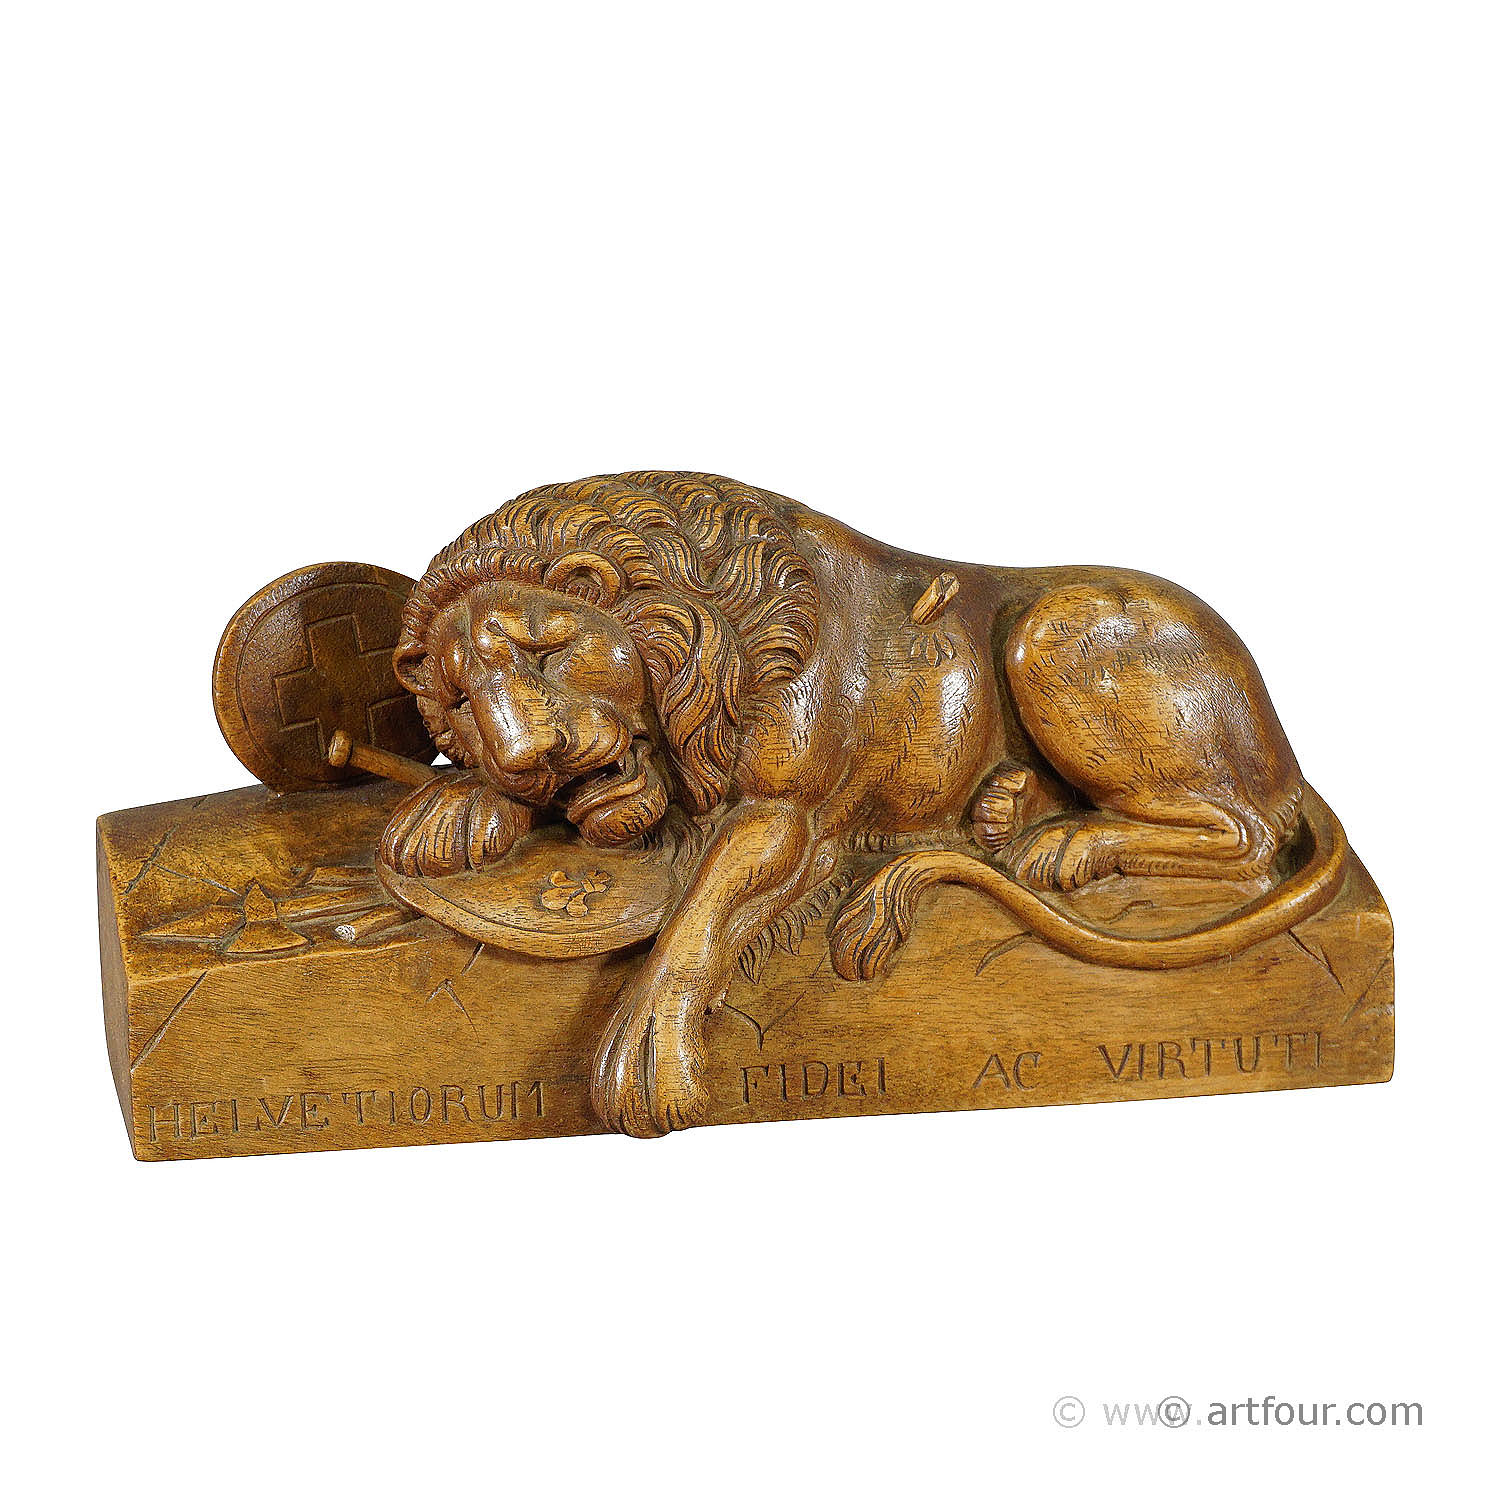 Antique Wooden Sculpture of the Lion of Lucerne, Brienz ca. 1900